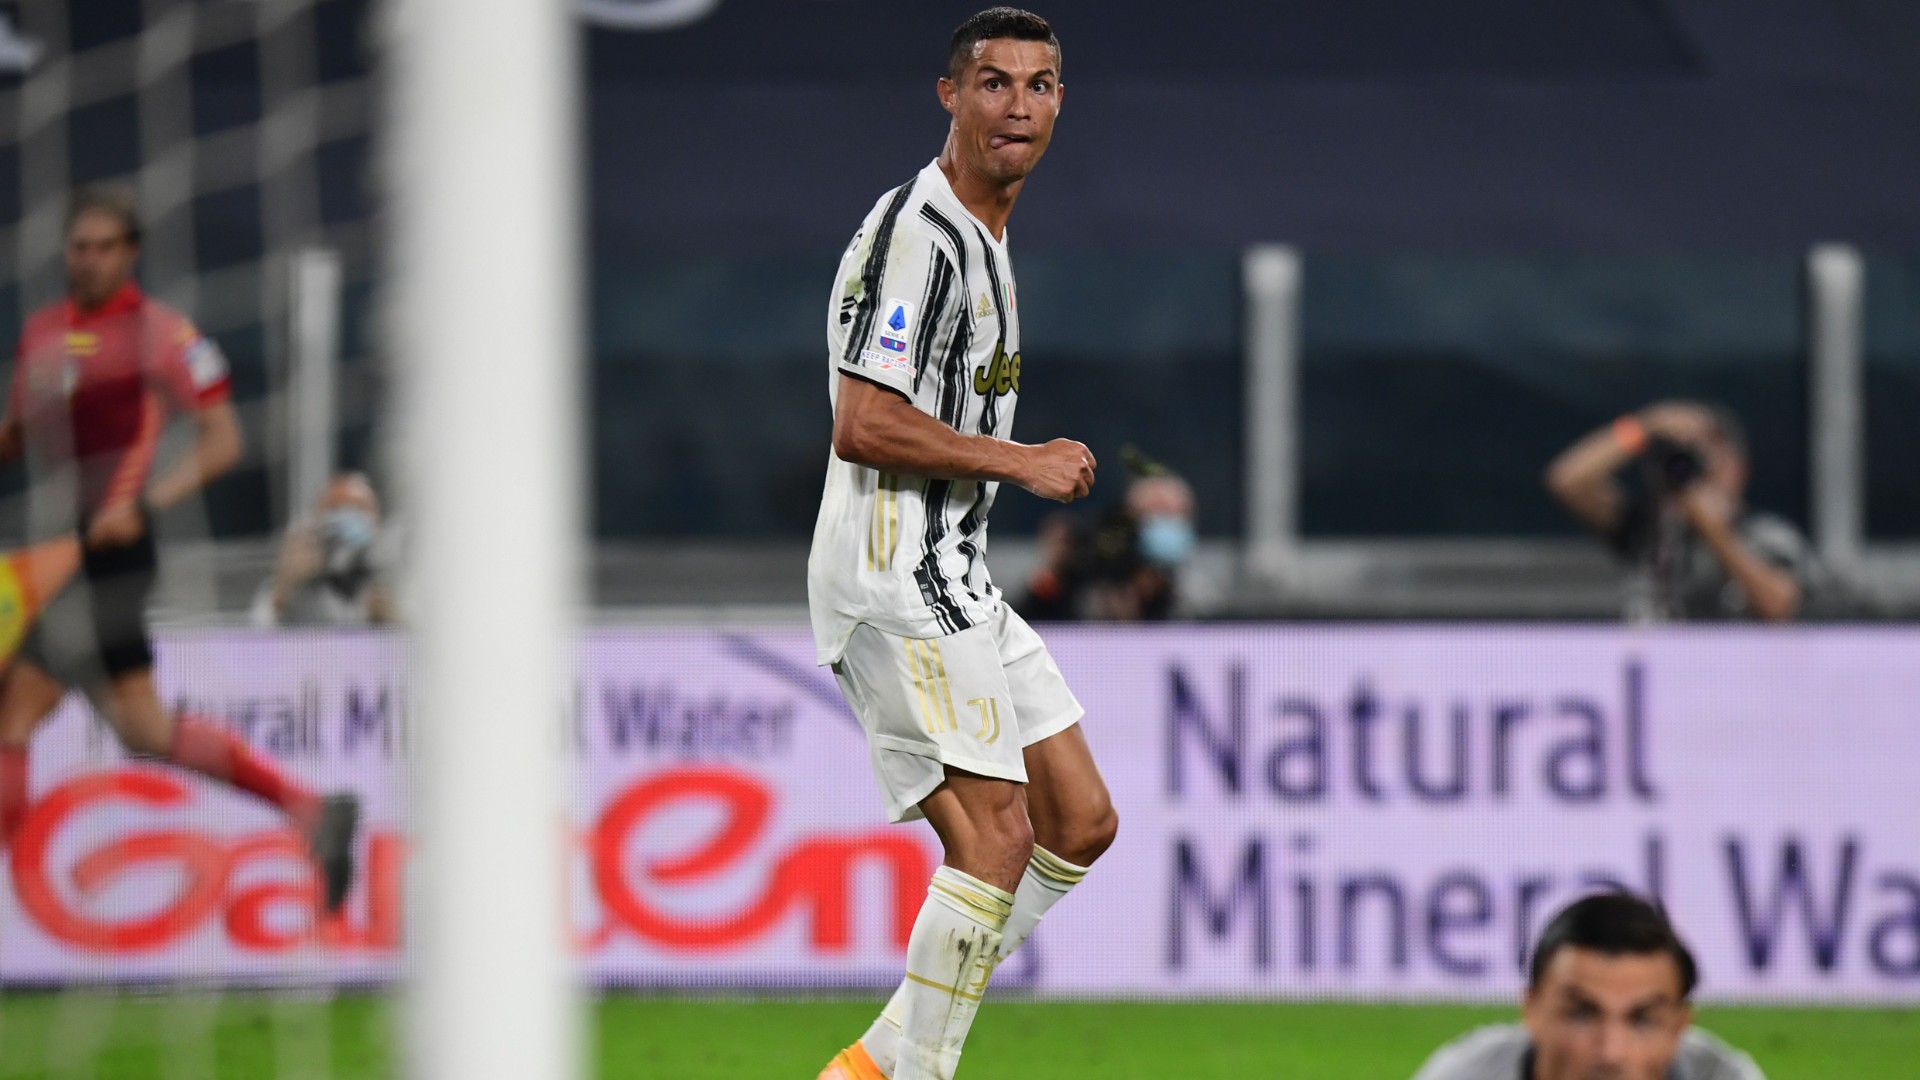 Le foto di Juventus-Sampdoria 3-0 - Le foto di Juventus-Sampdoria 3-0 |  Virgilio Sport